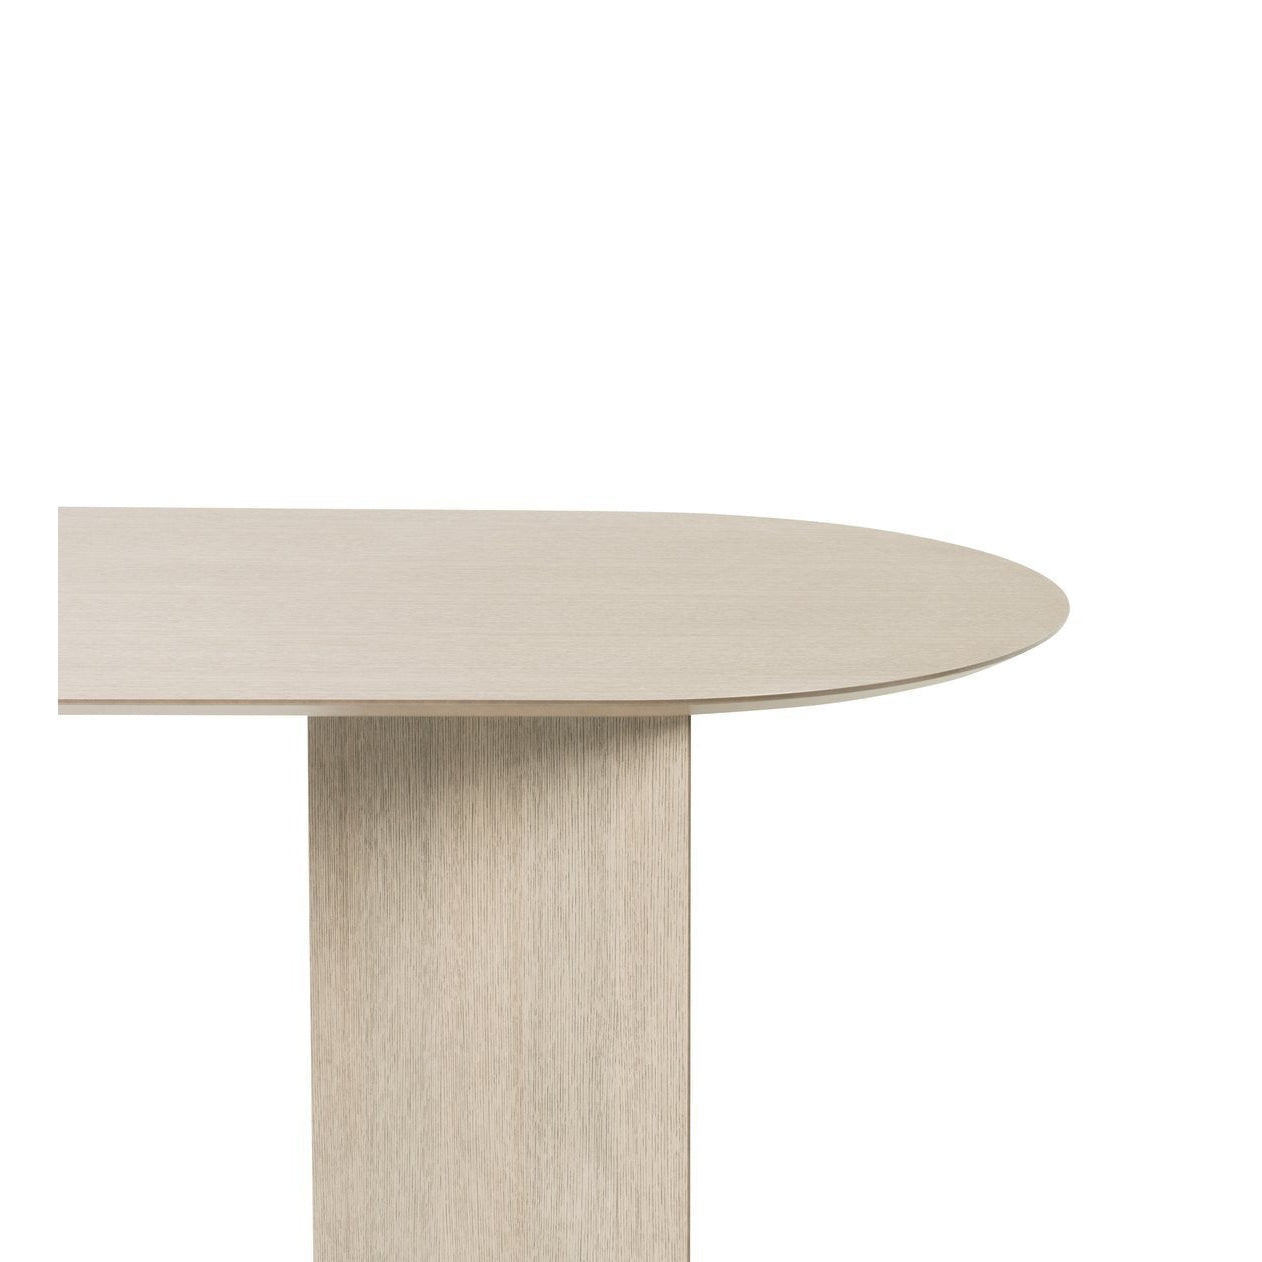 Ferm Living Mingle Table Top Top Oak Oval naturale, 220 cm